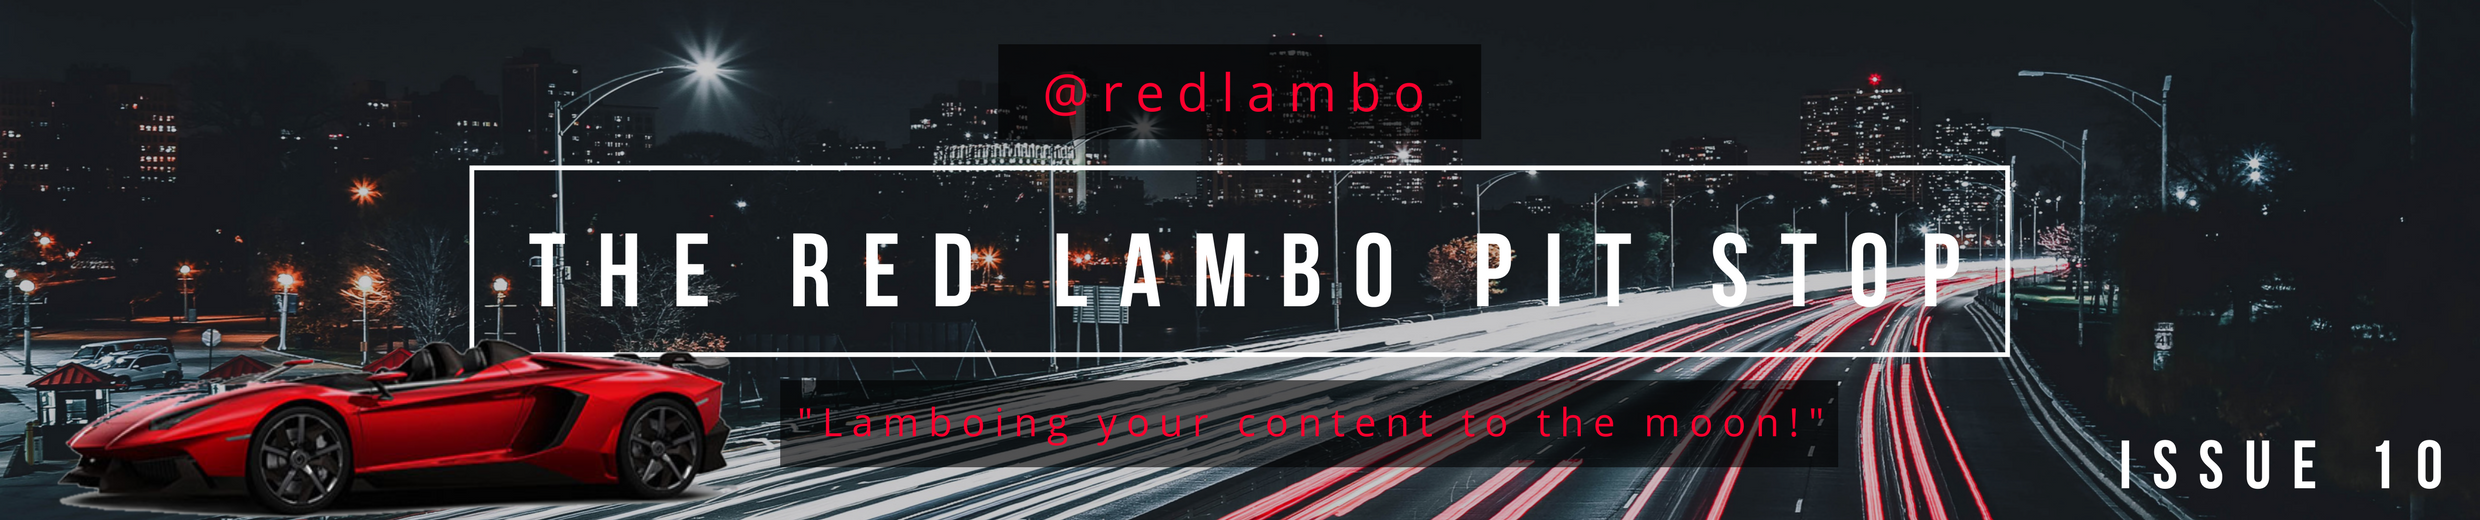 Red Lambo Header-9.png